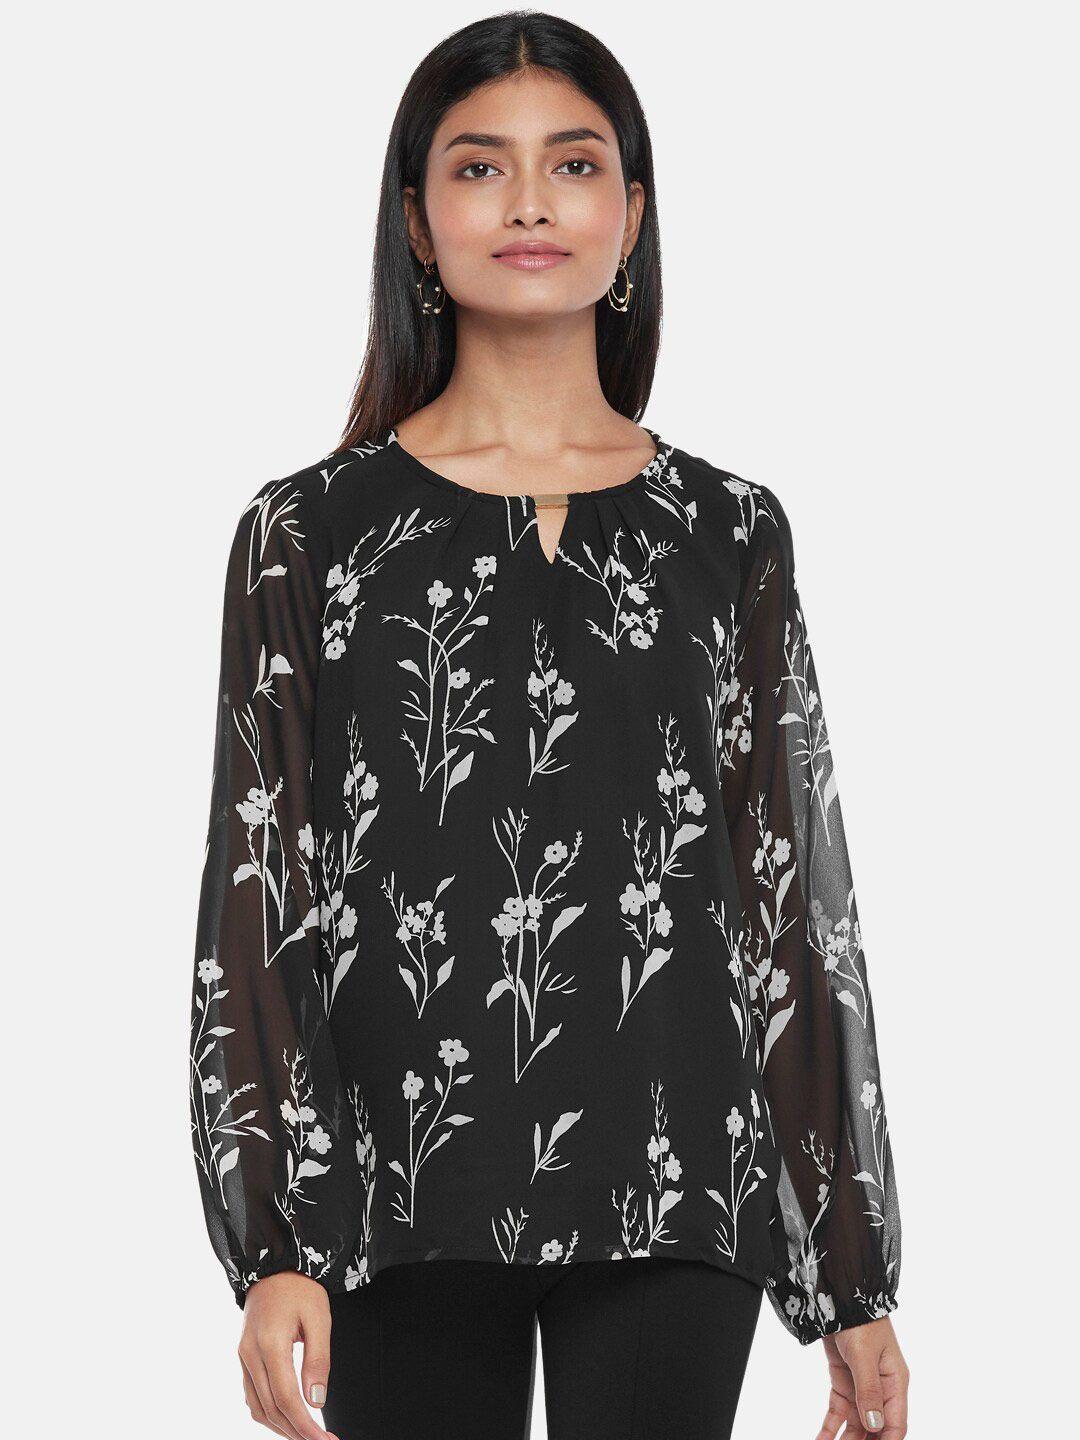 annabelle by pantaloons black floral print keyhole neck top